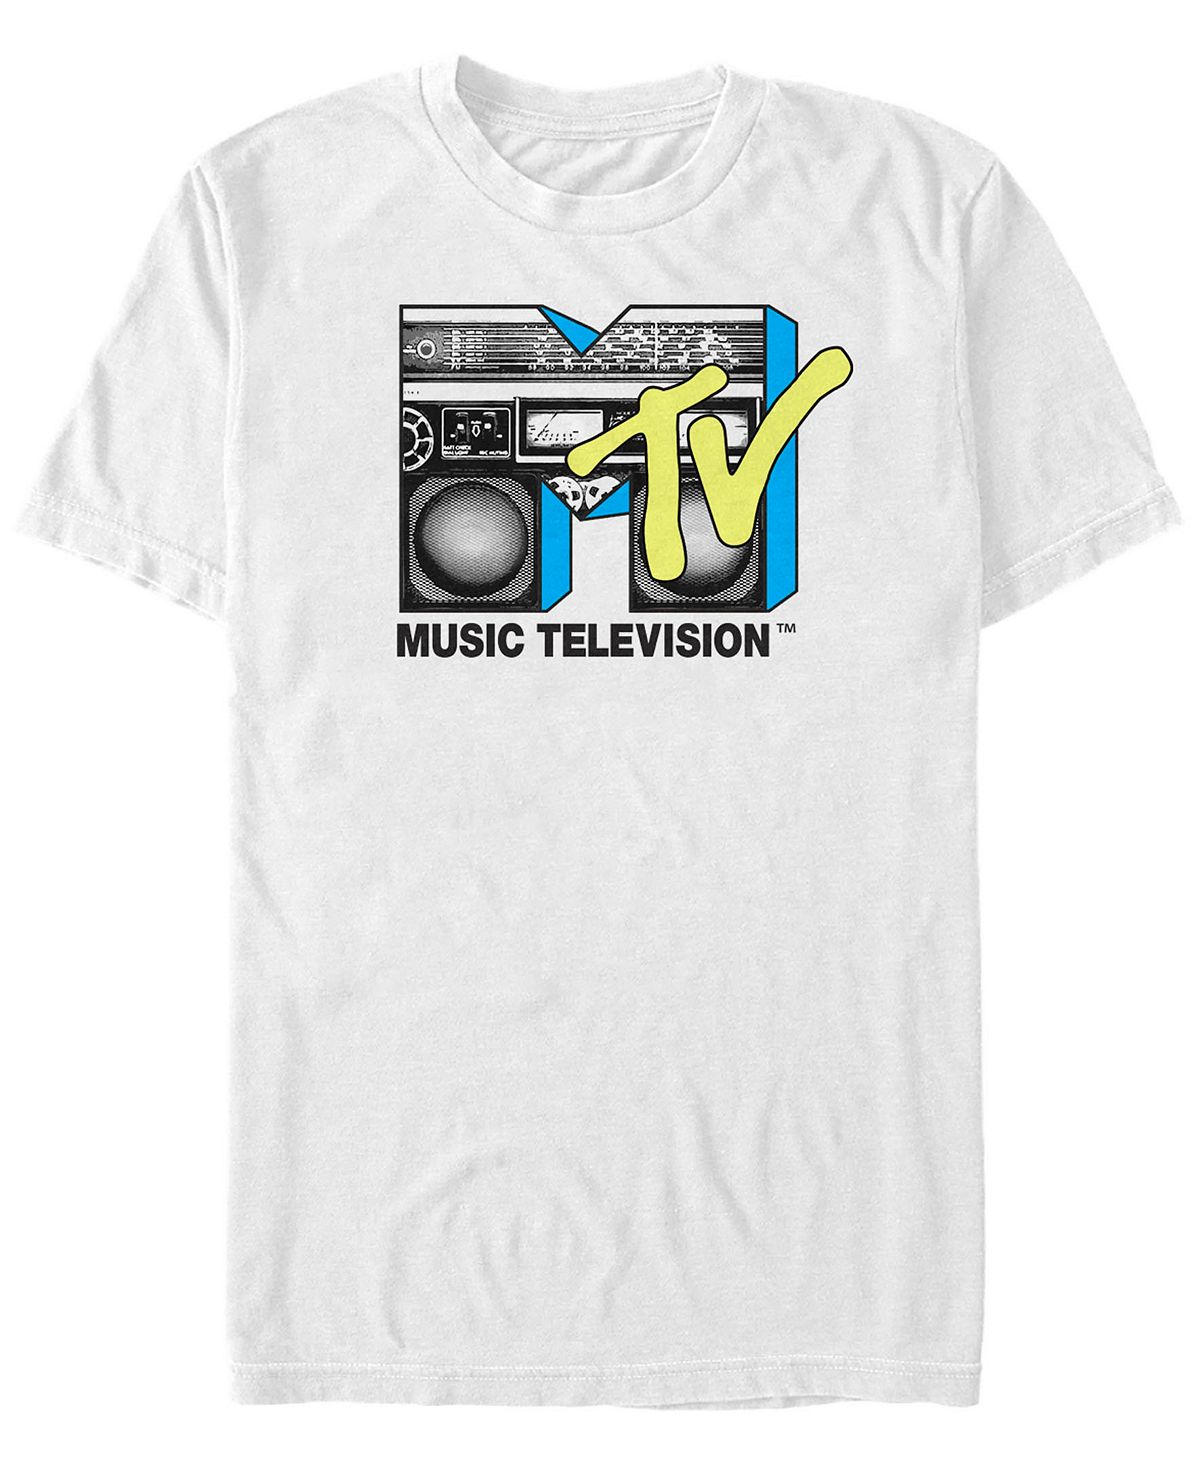 Мужская черно-желтая футболка с коротким рукавом boombox с логотипом Fifth Sun, белый пульт huayu для телевизора mystery mtv 3217lw